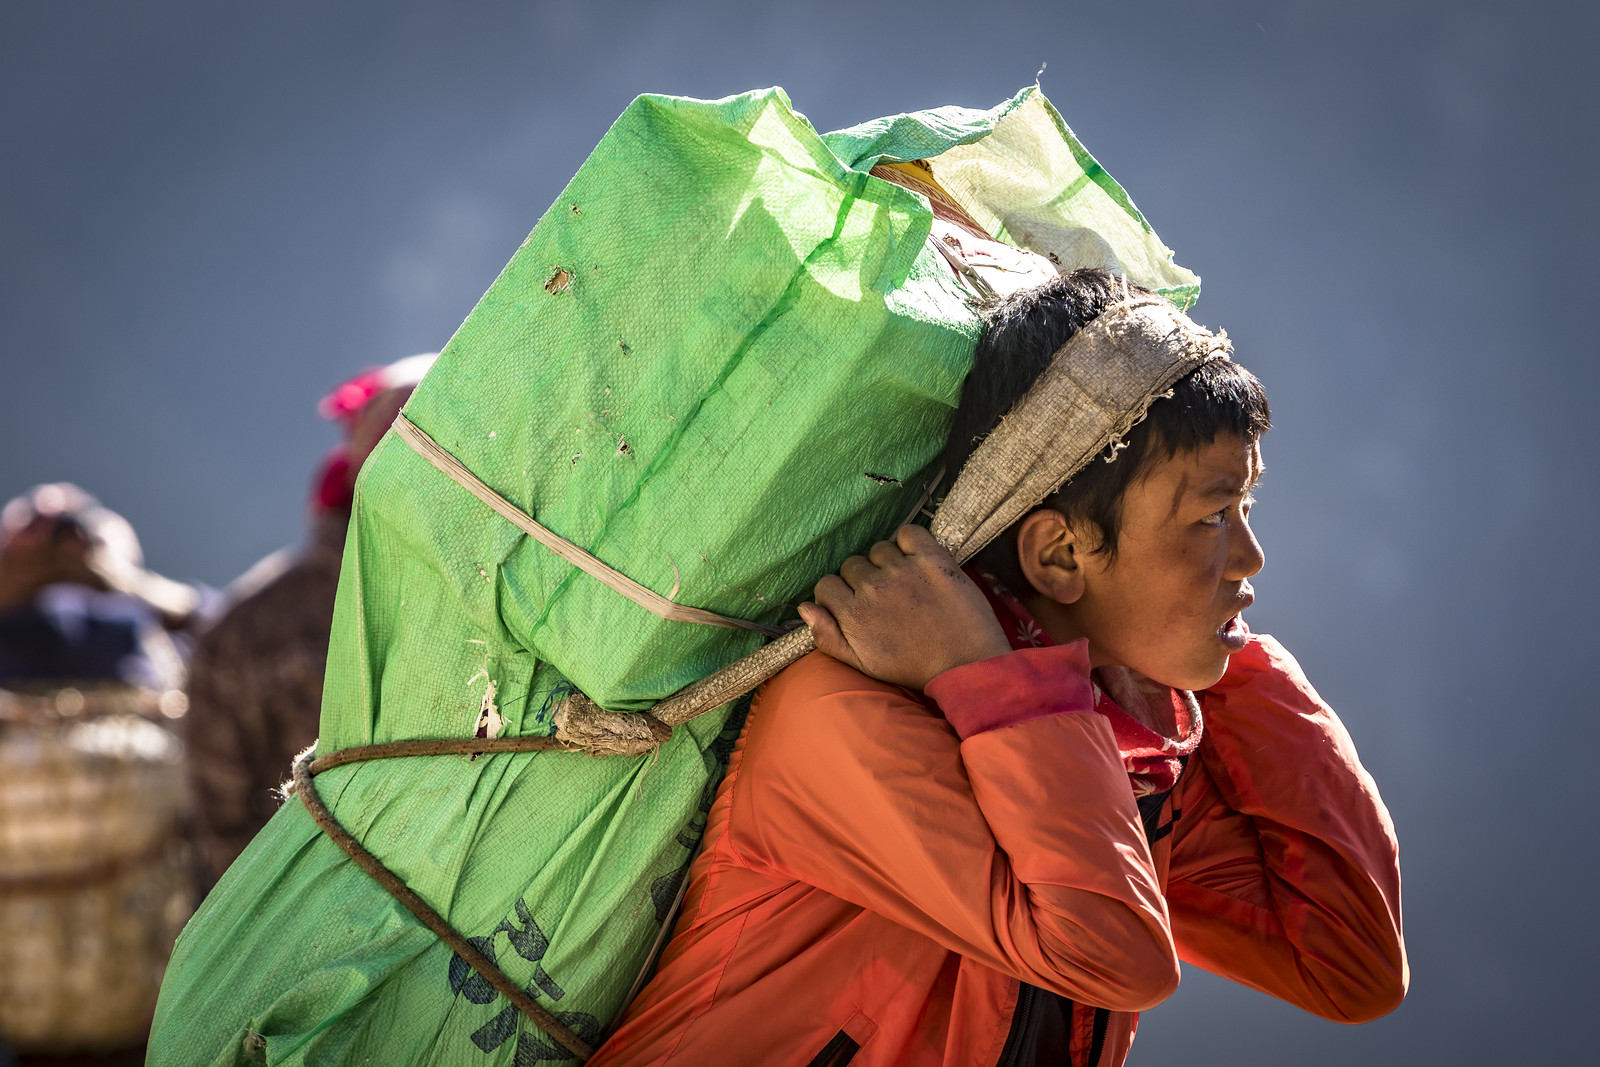 Young sherpa - Népal